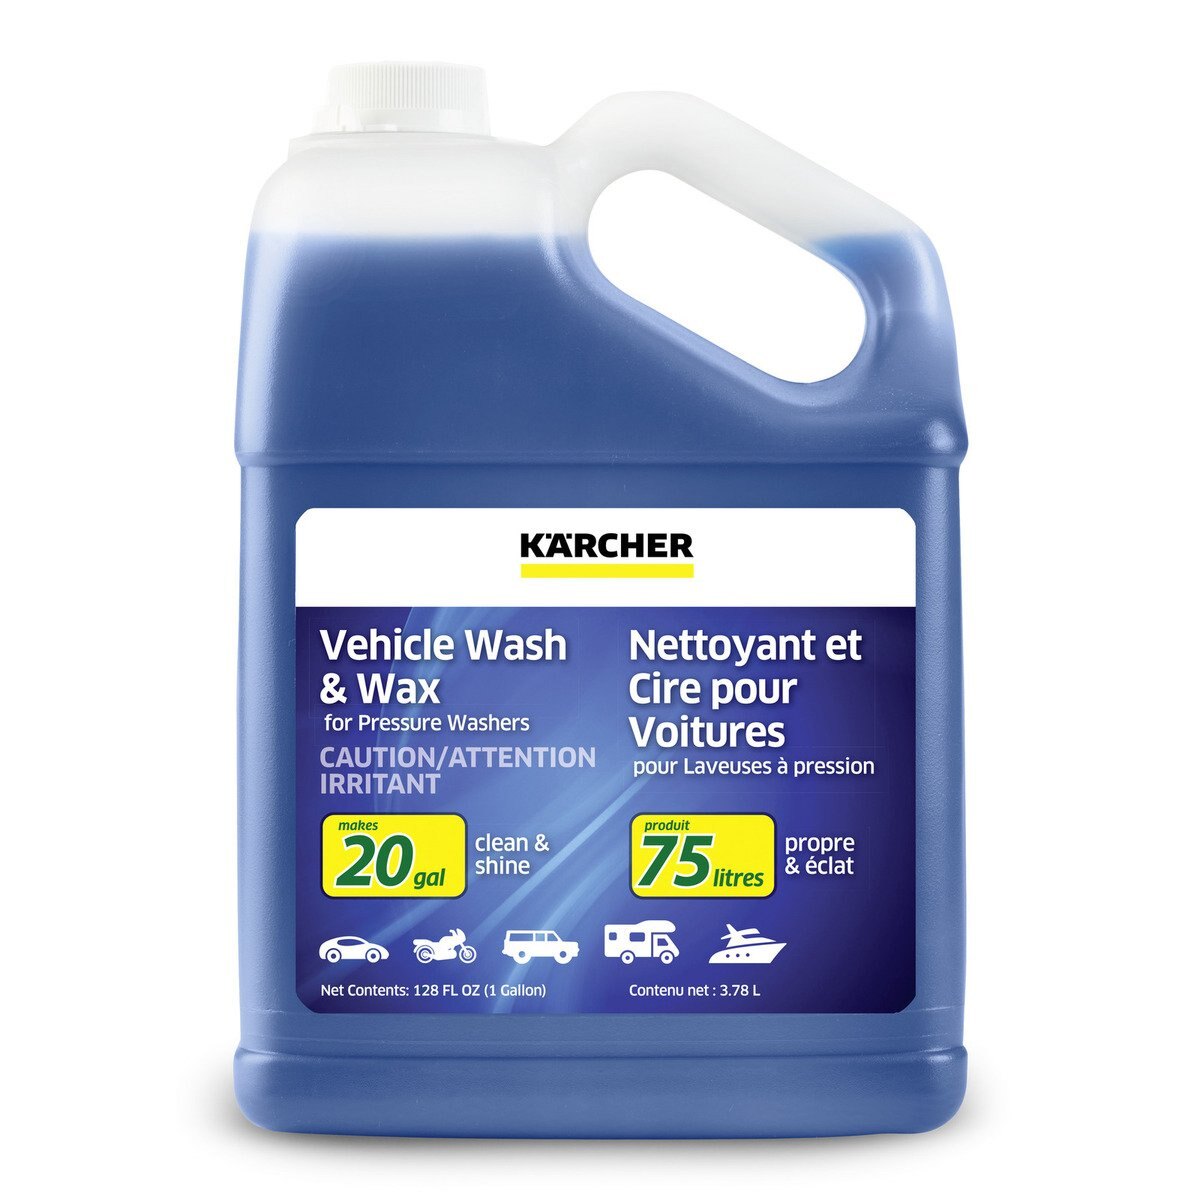 Karcher Vehicle Detergent 1 Gal. 20x Formula, 1g